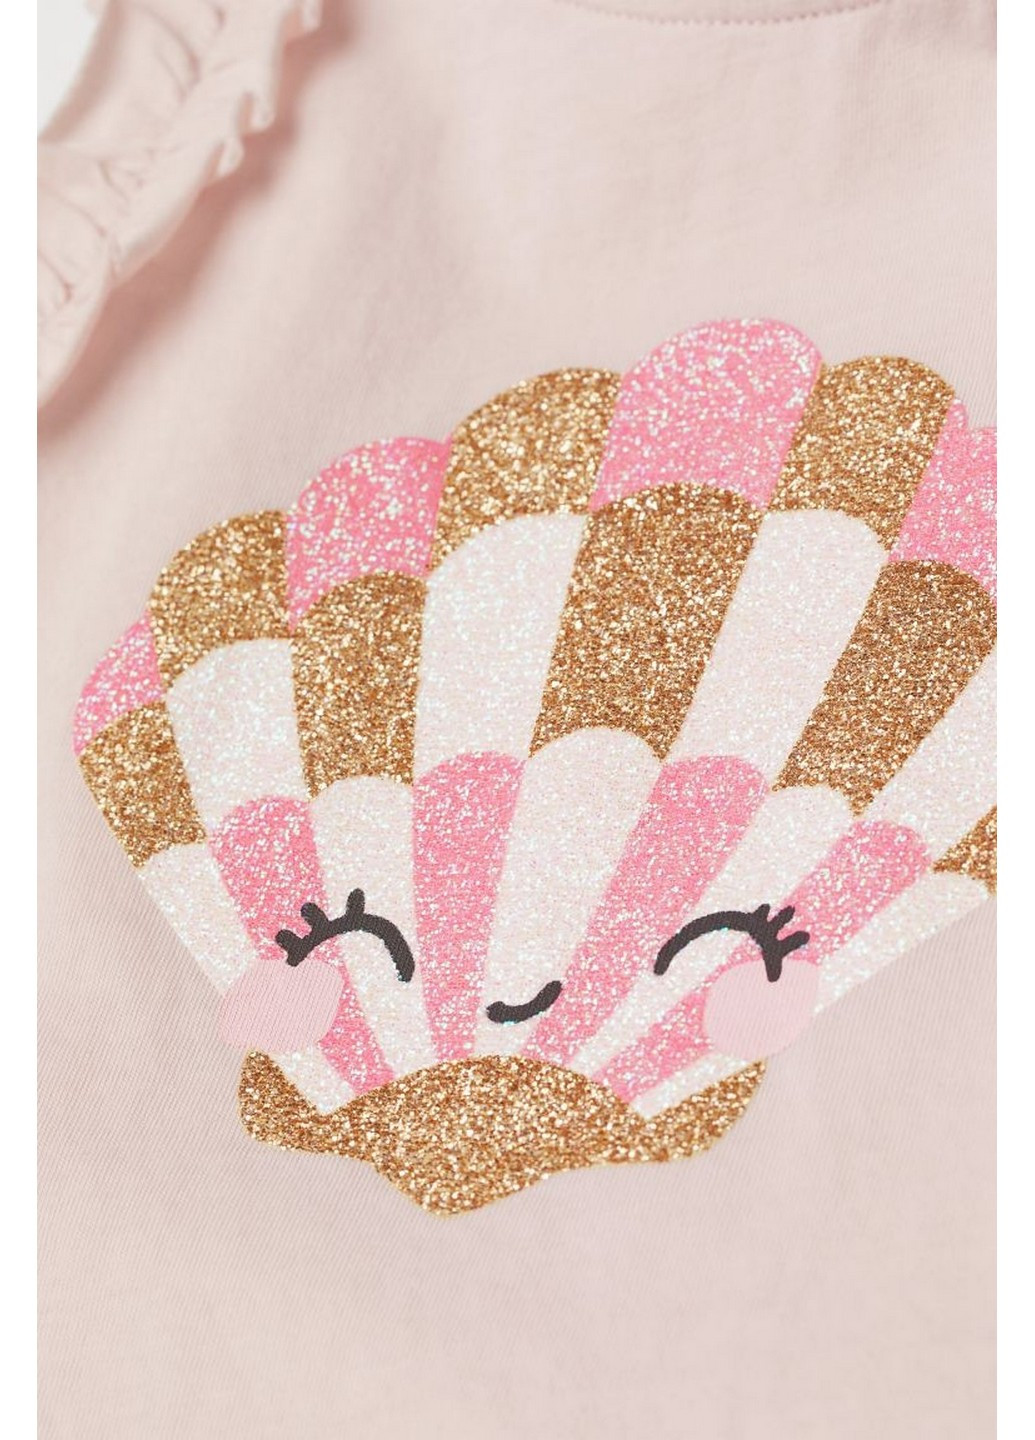 Розовая летняя футболка для девочки H&M